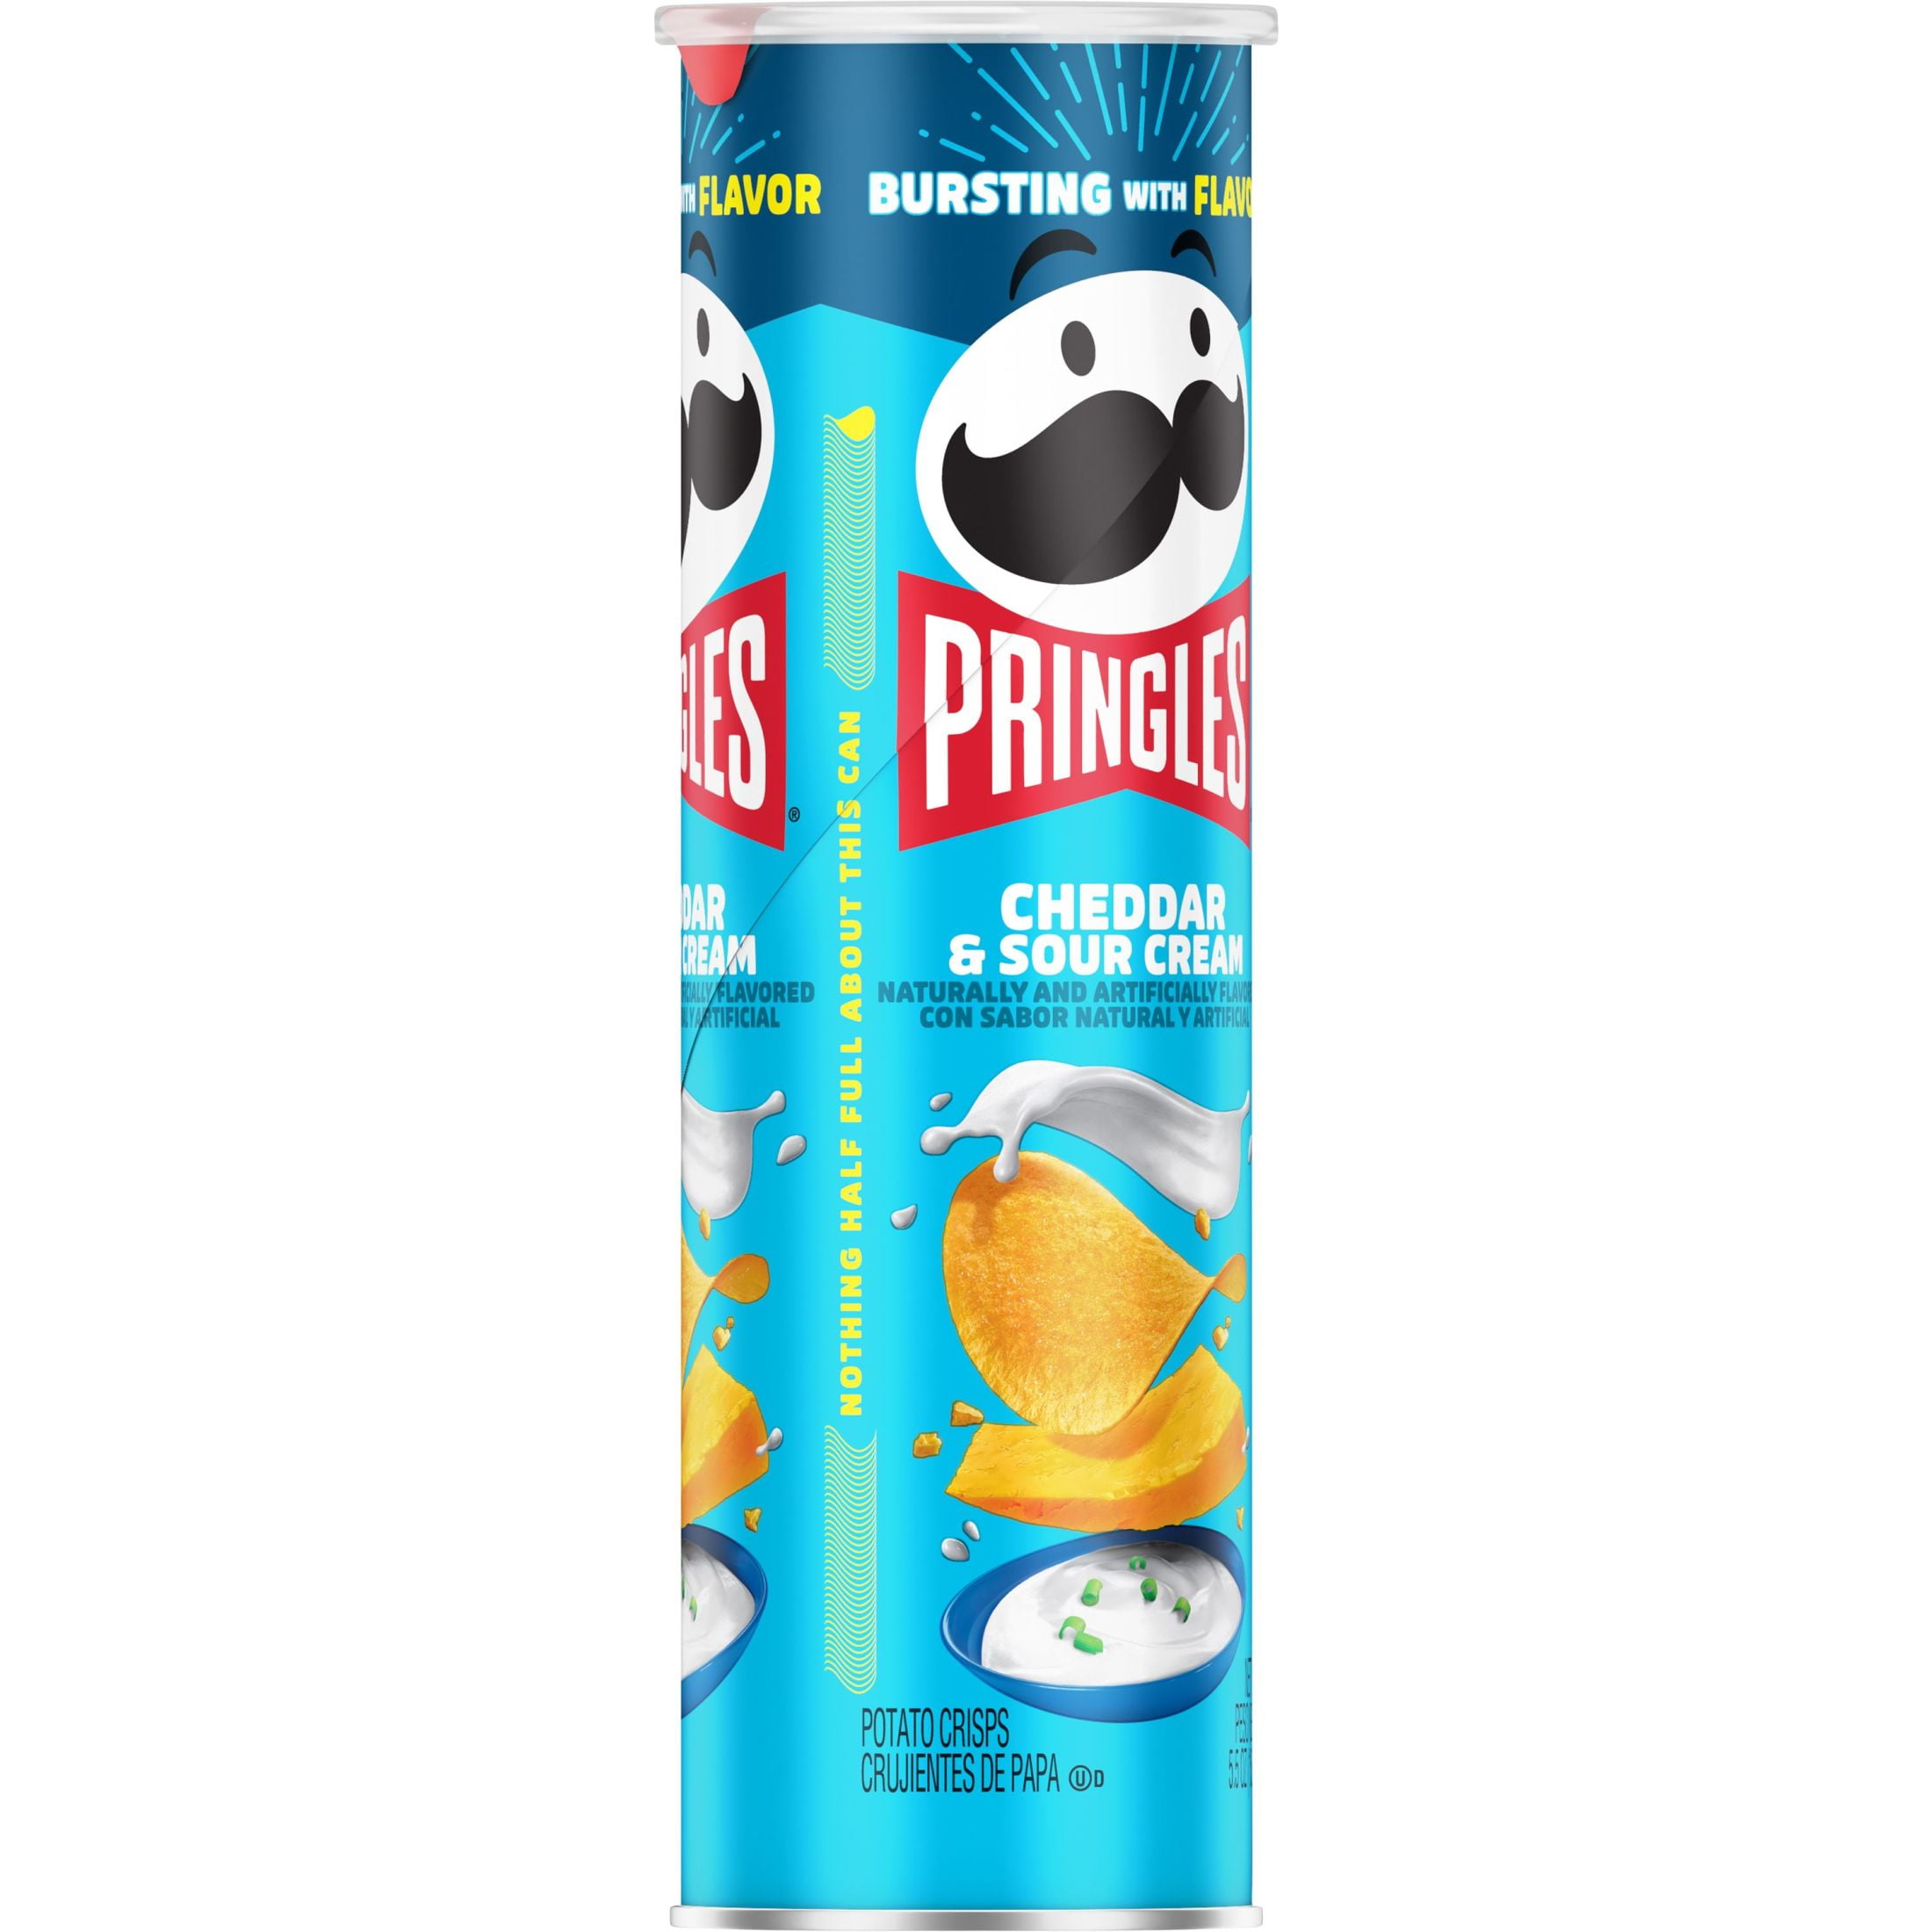  Pringles Potato Chips Variety Pack BBQ Cheddar & Sour